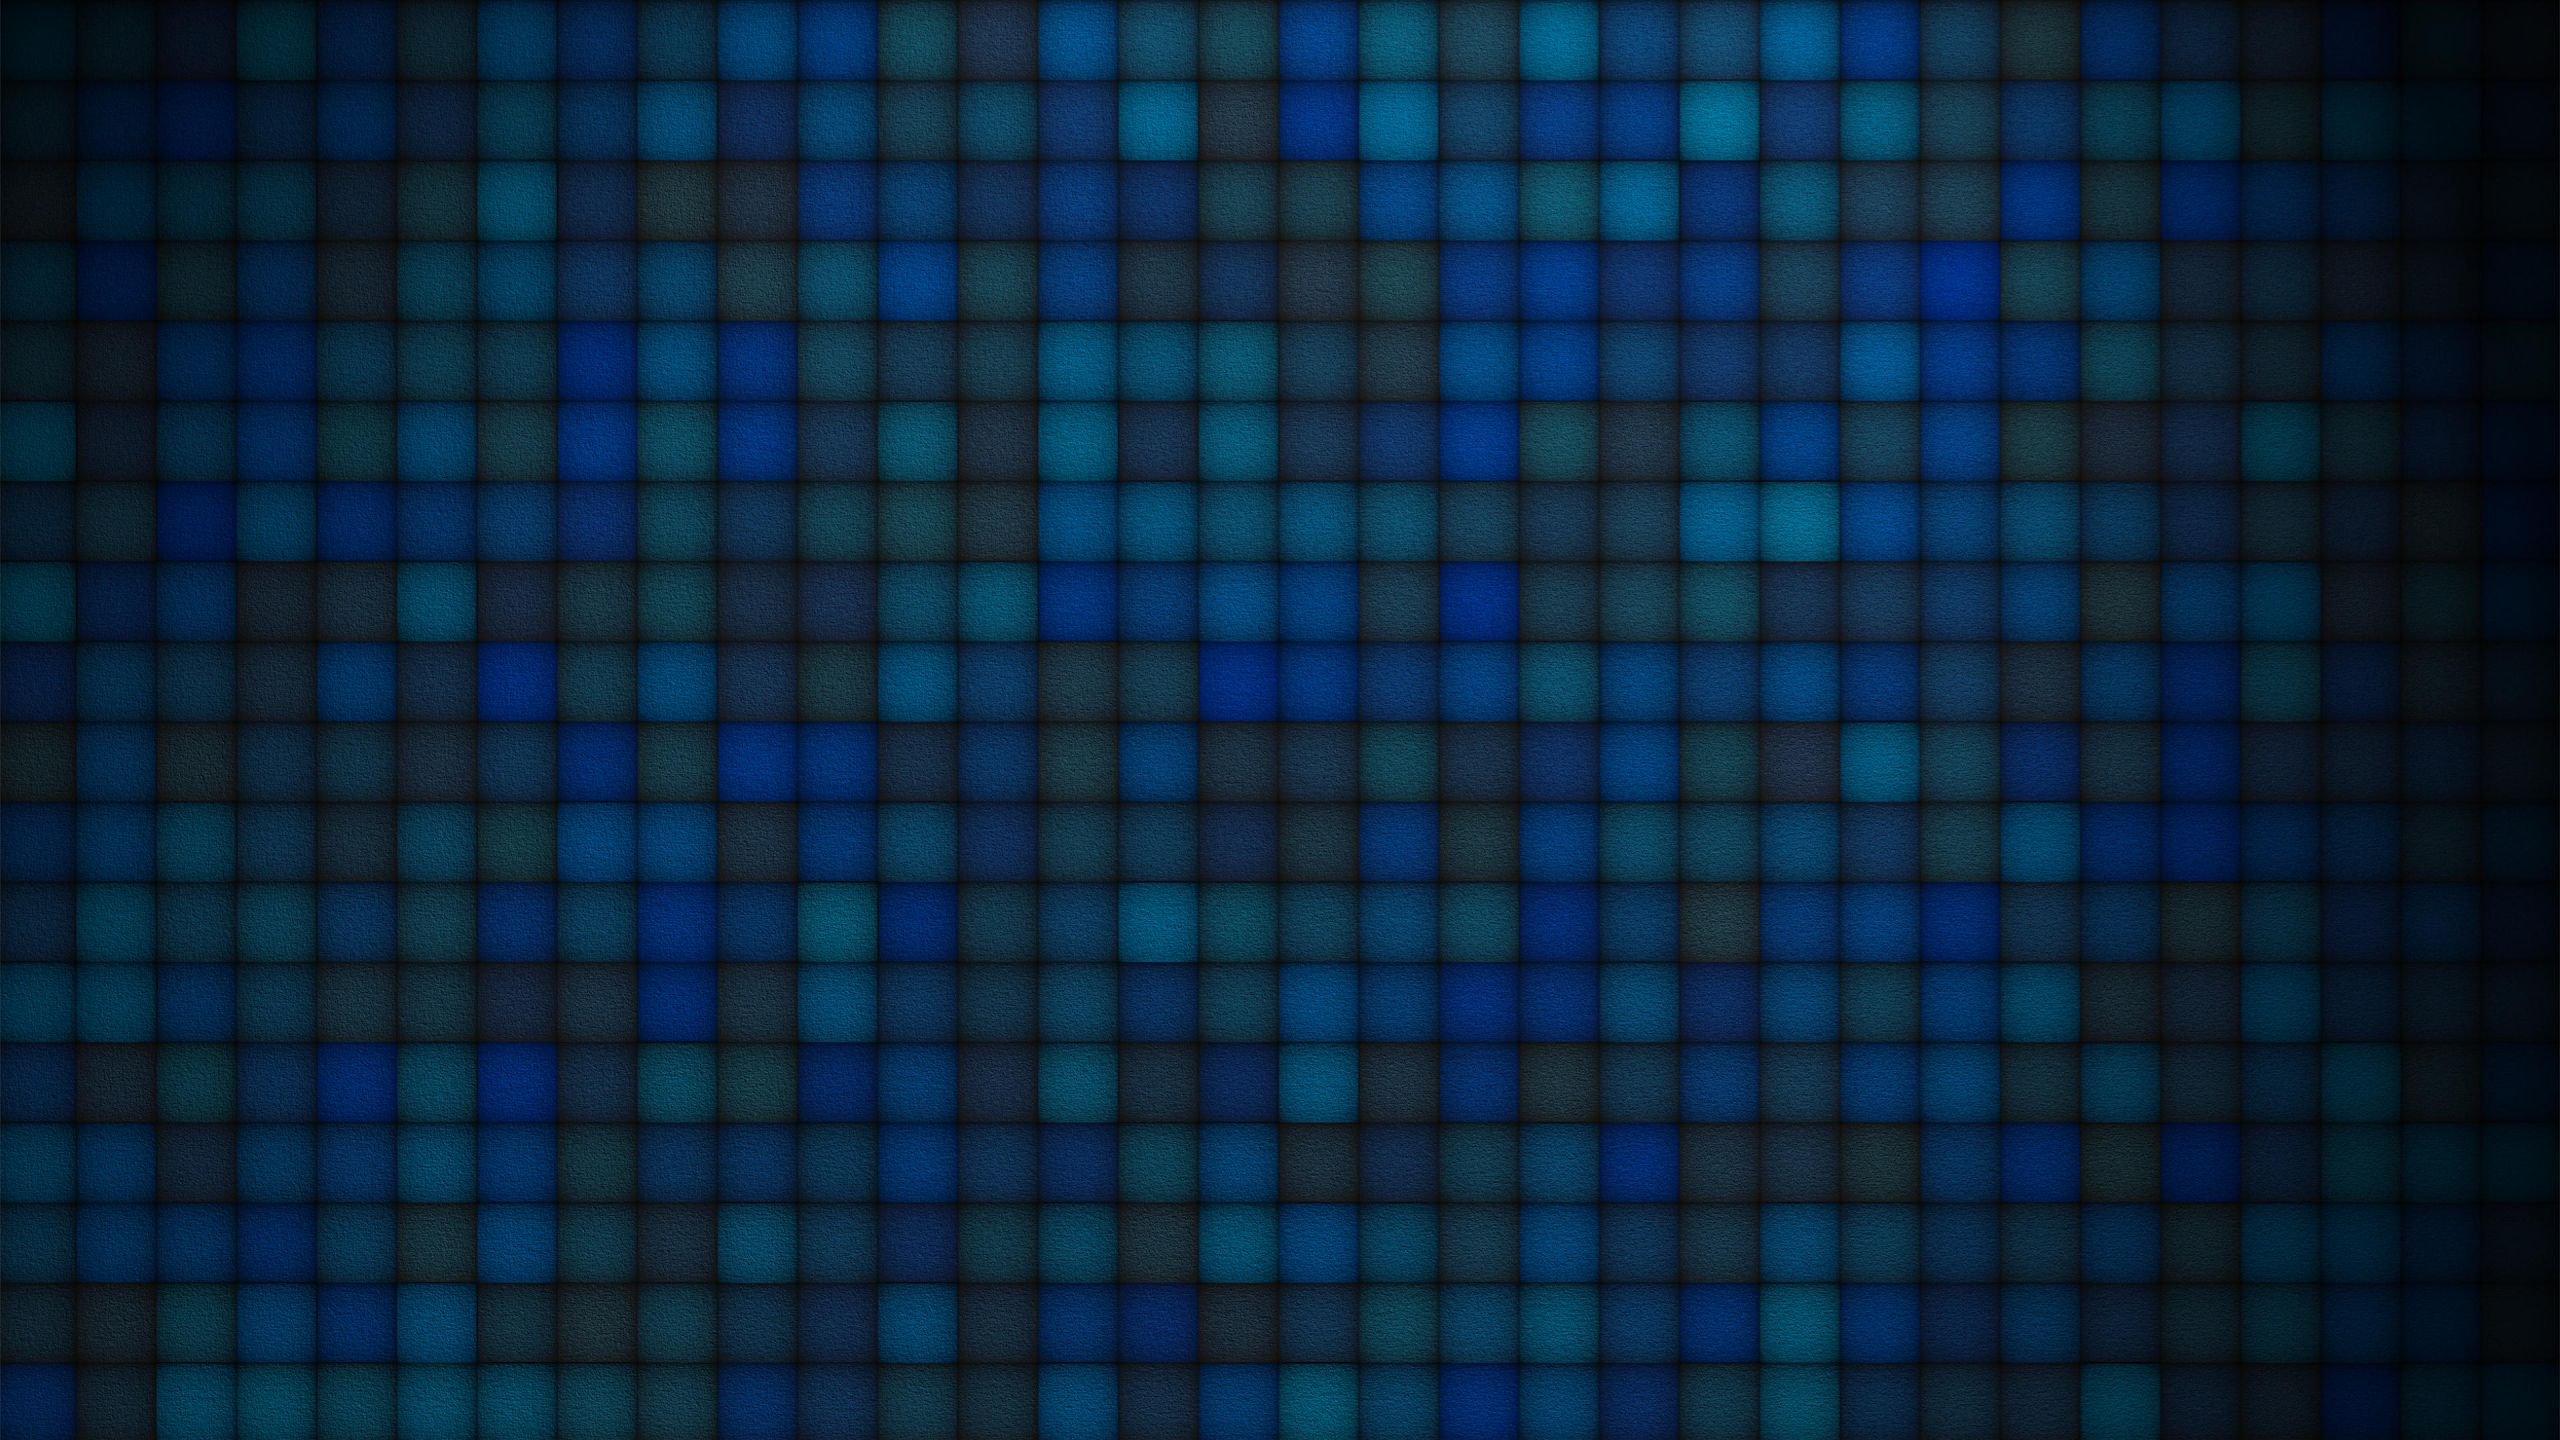 Blue Comfort wallpaper in 2560x1440 resolution